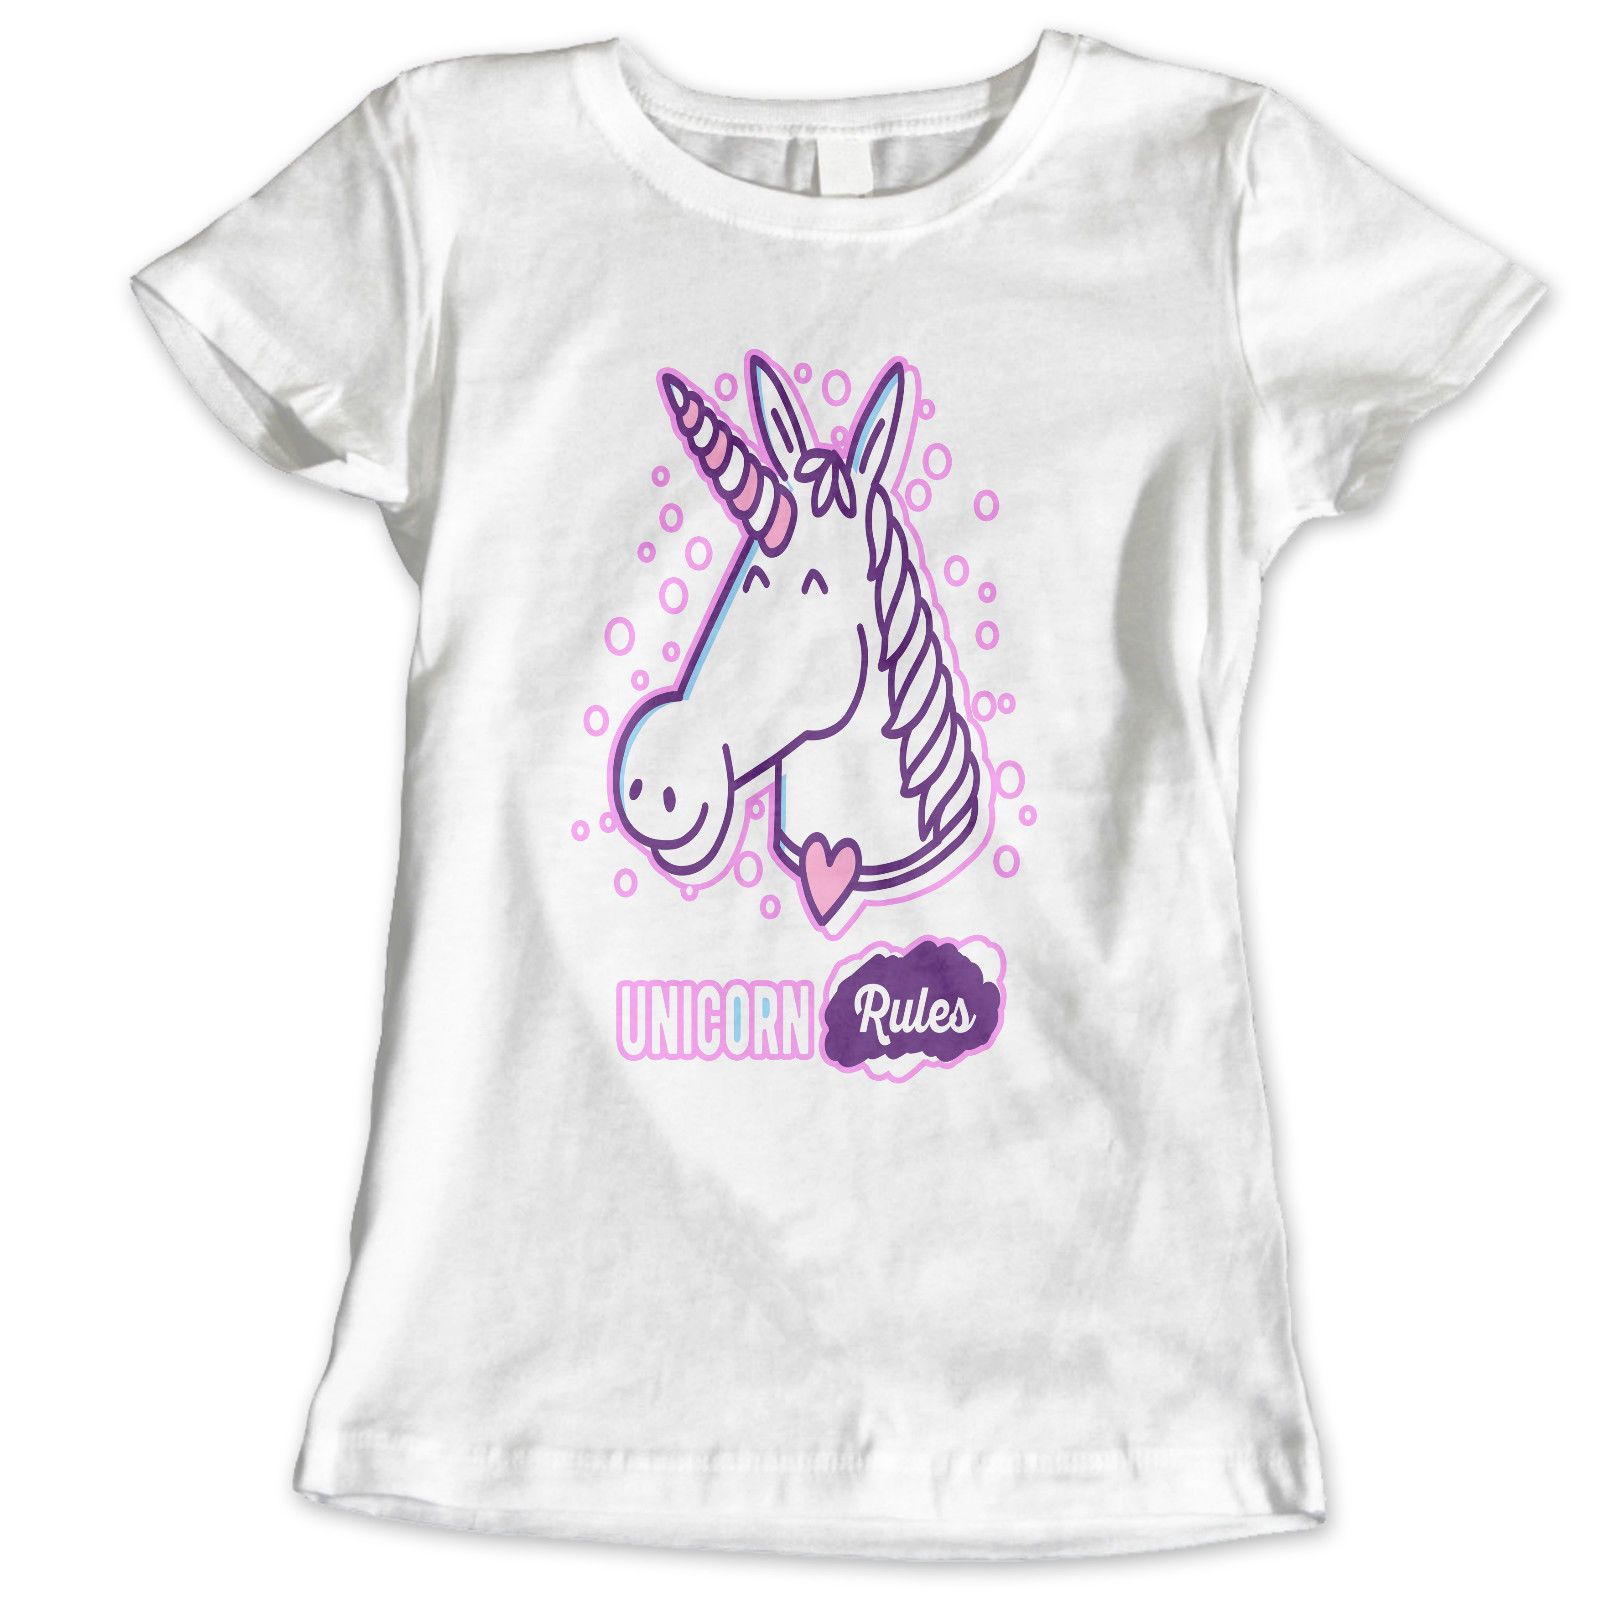 Camiseta De Mujer Girls Womans Unicorn Celebrity Girly Tumblr Cartoon Love T Shirt Ropa Moda Camiseta 2017 Envío Gratis De 24,98 € | DHgate